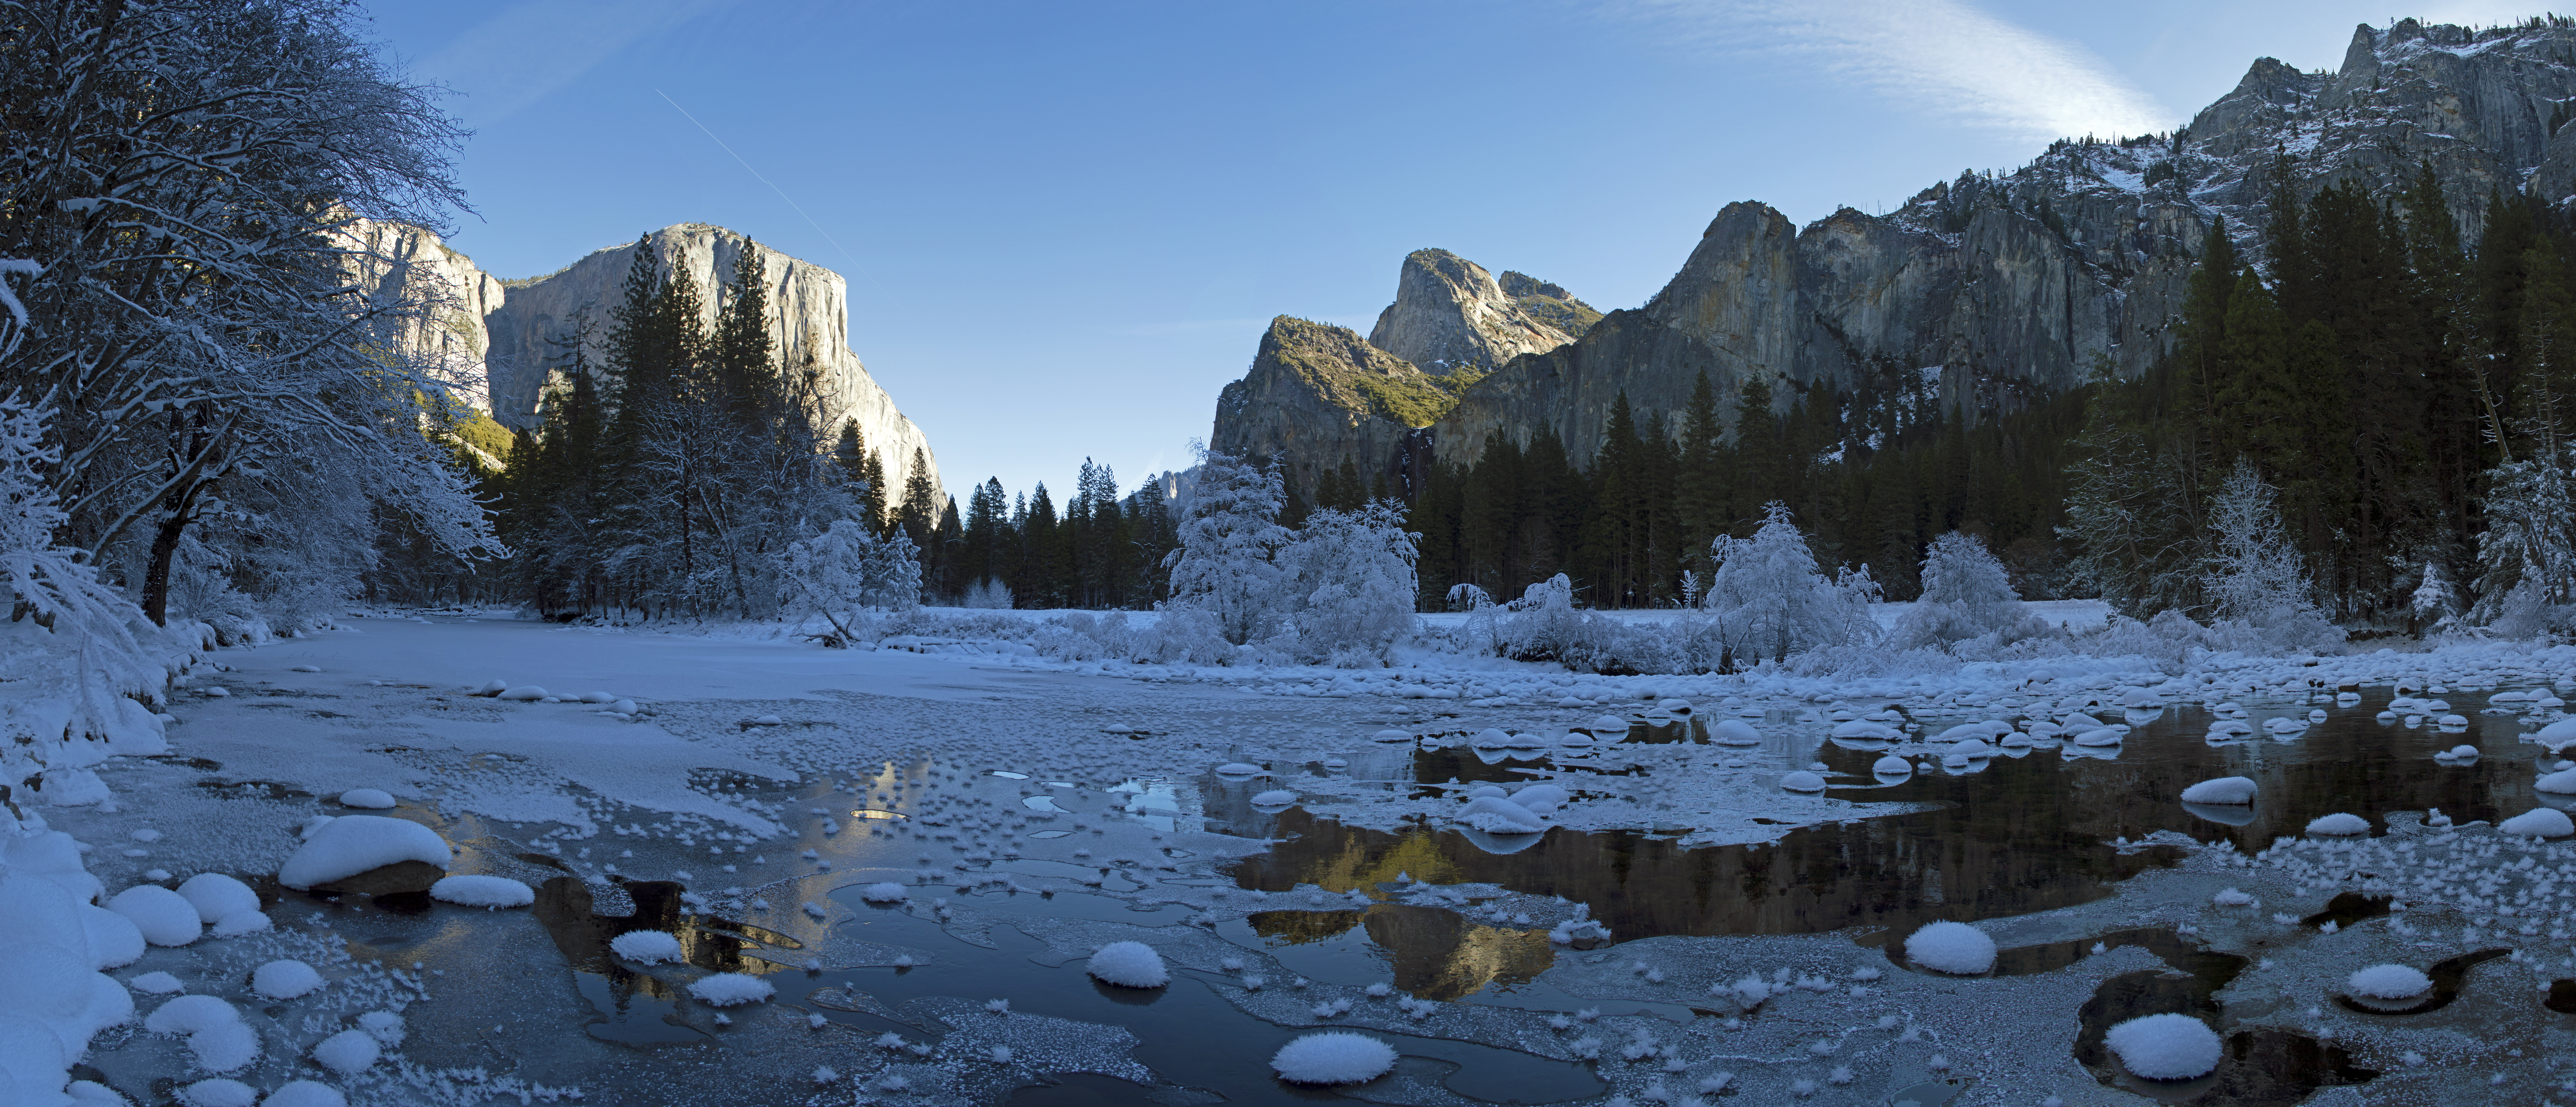 Frozen Yosemite.jpg